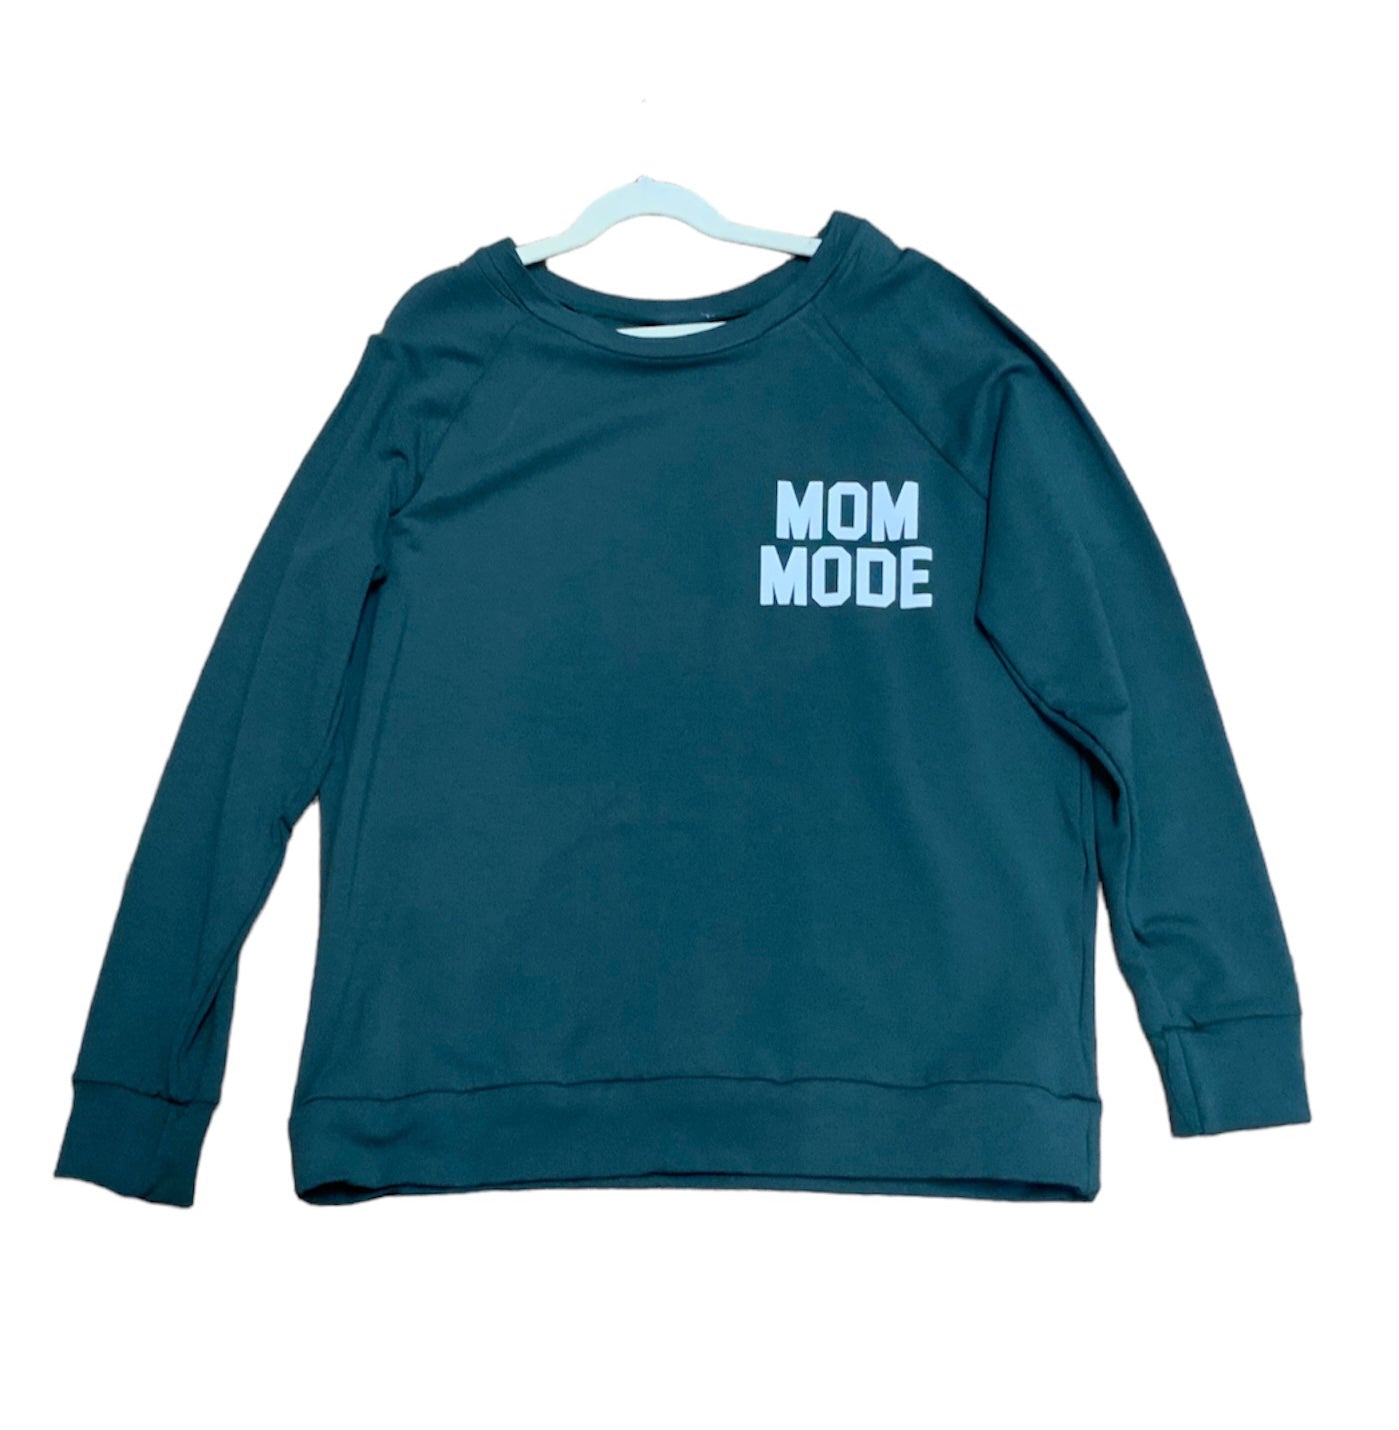 Posh & Cozy Adult Sweaters Mom Mode small